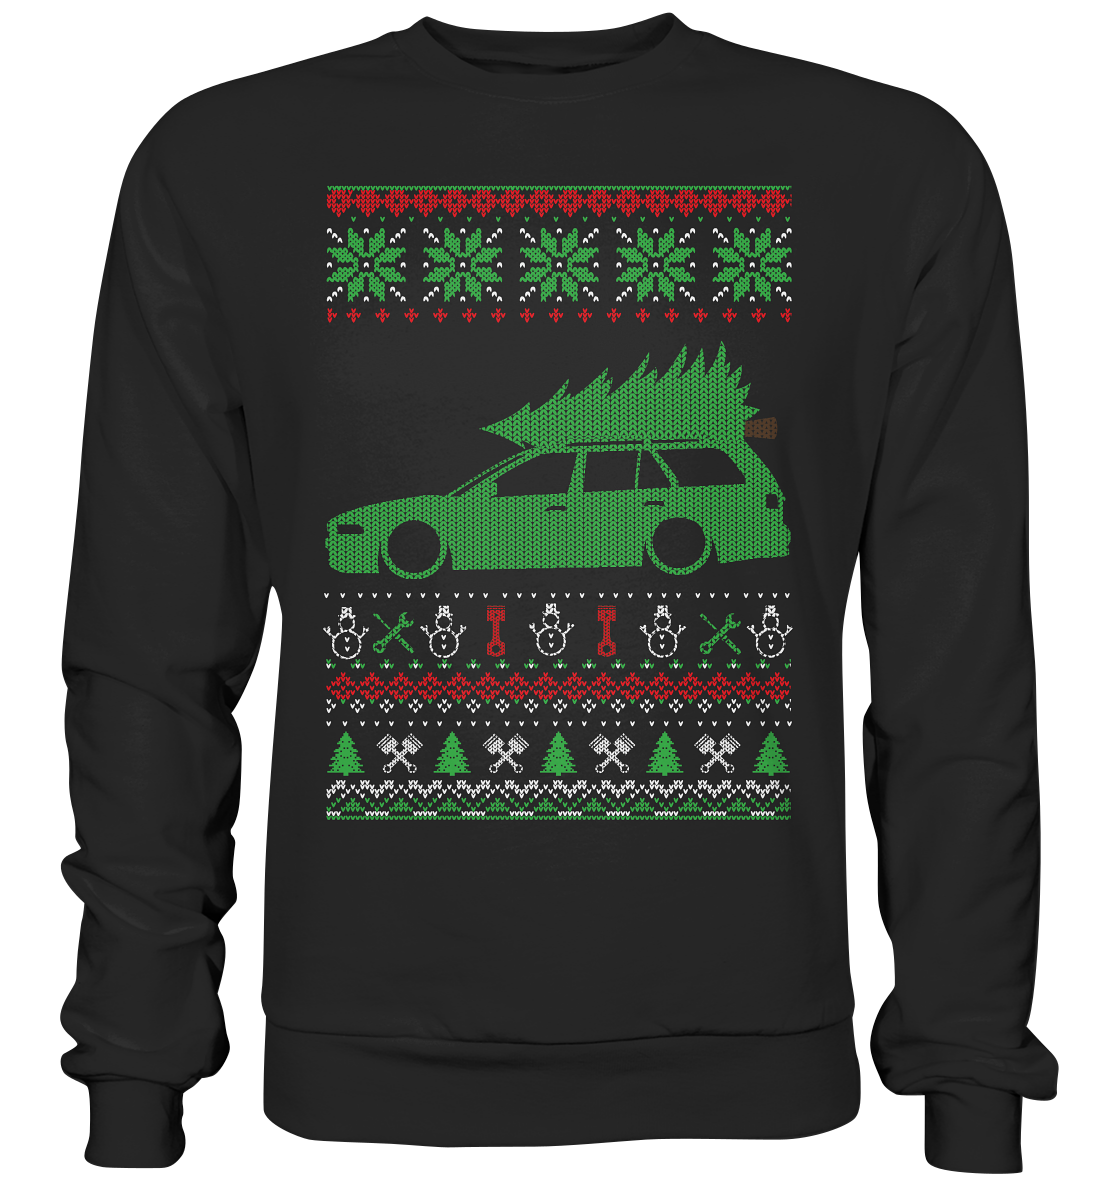 CODUGLY_MGKGK - Premium Sweatshirt